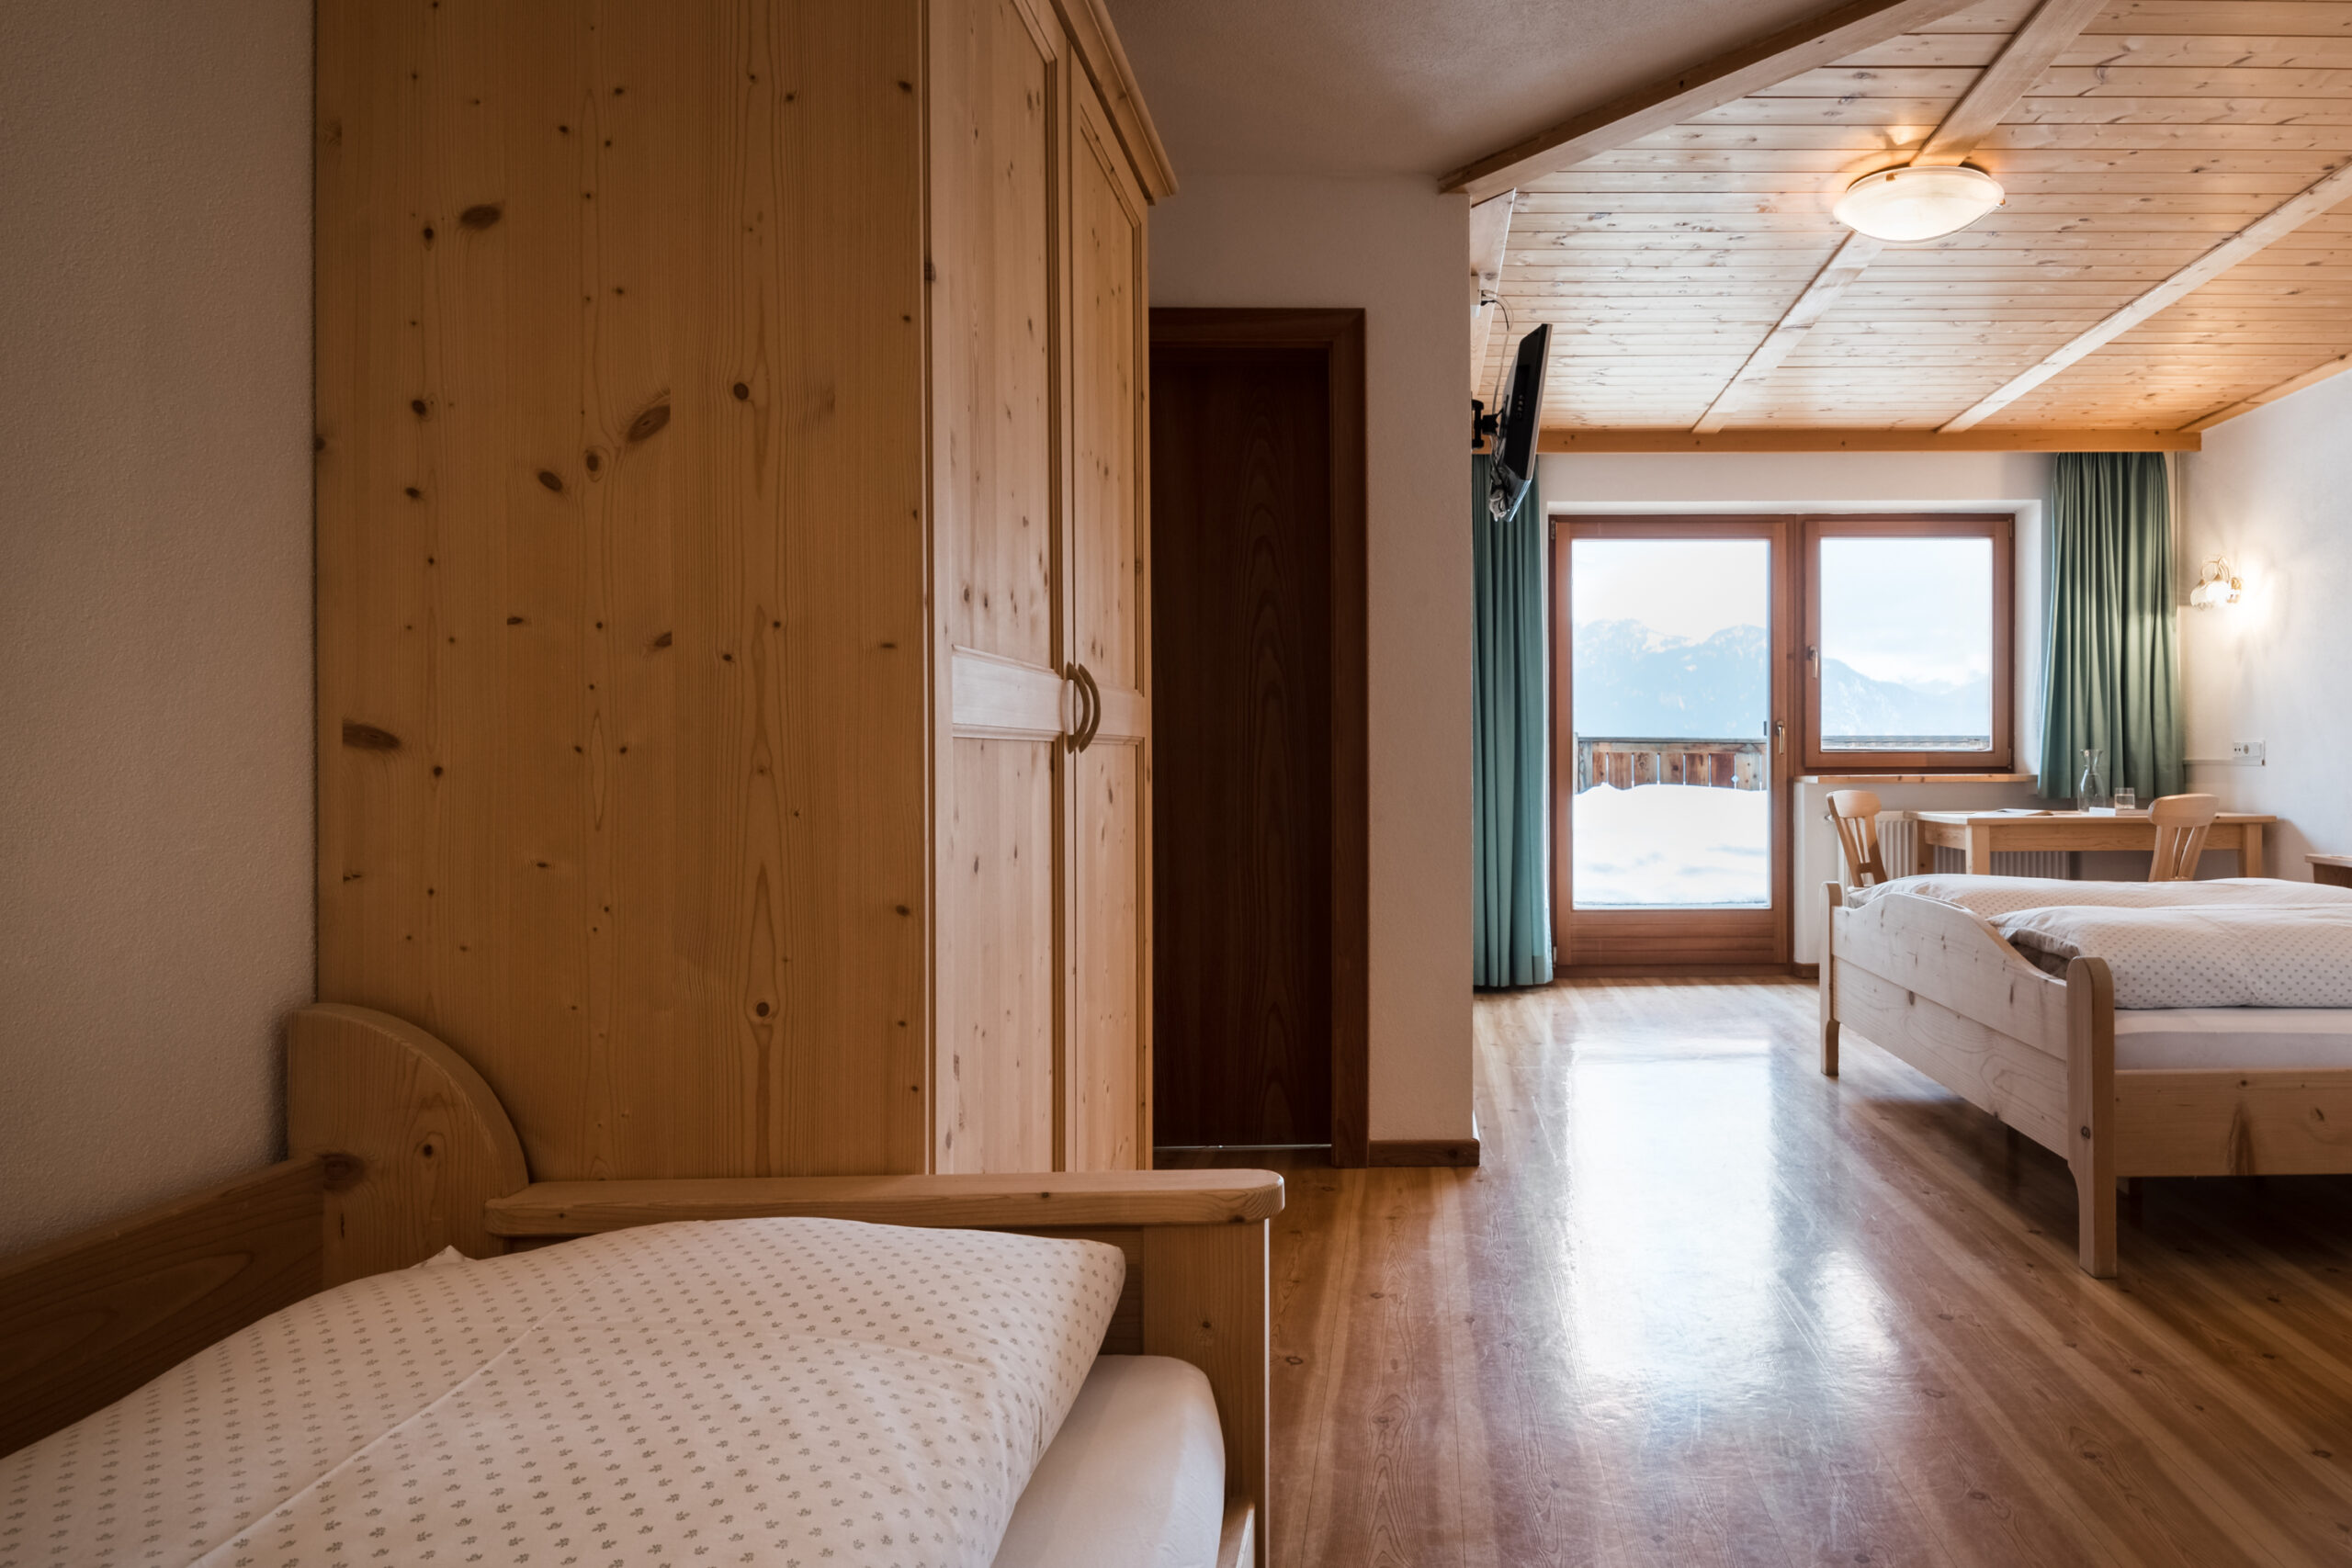 Armentara Holzzimmer im alpinen Stil Mountain Lodge Ciurnadù La Val